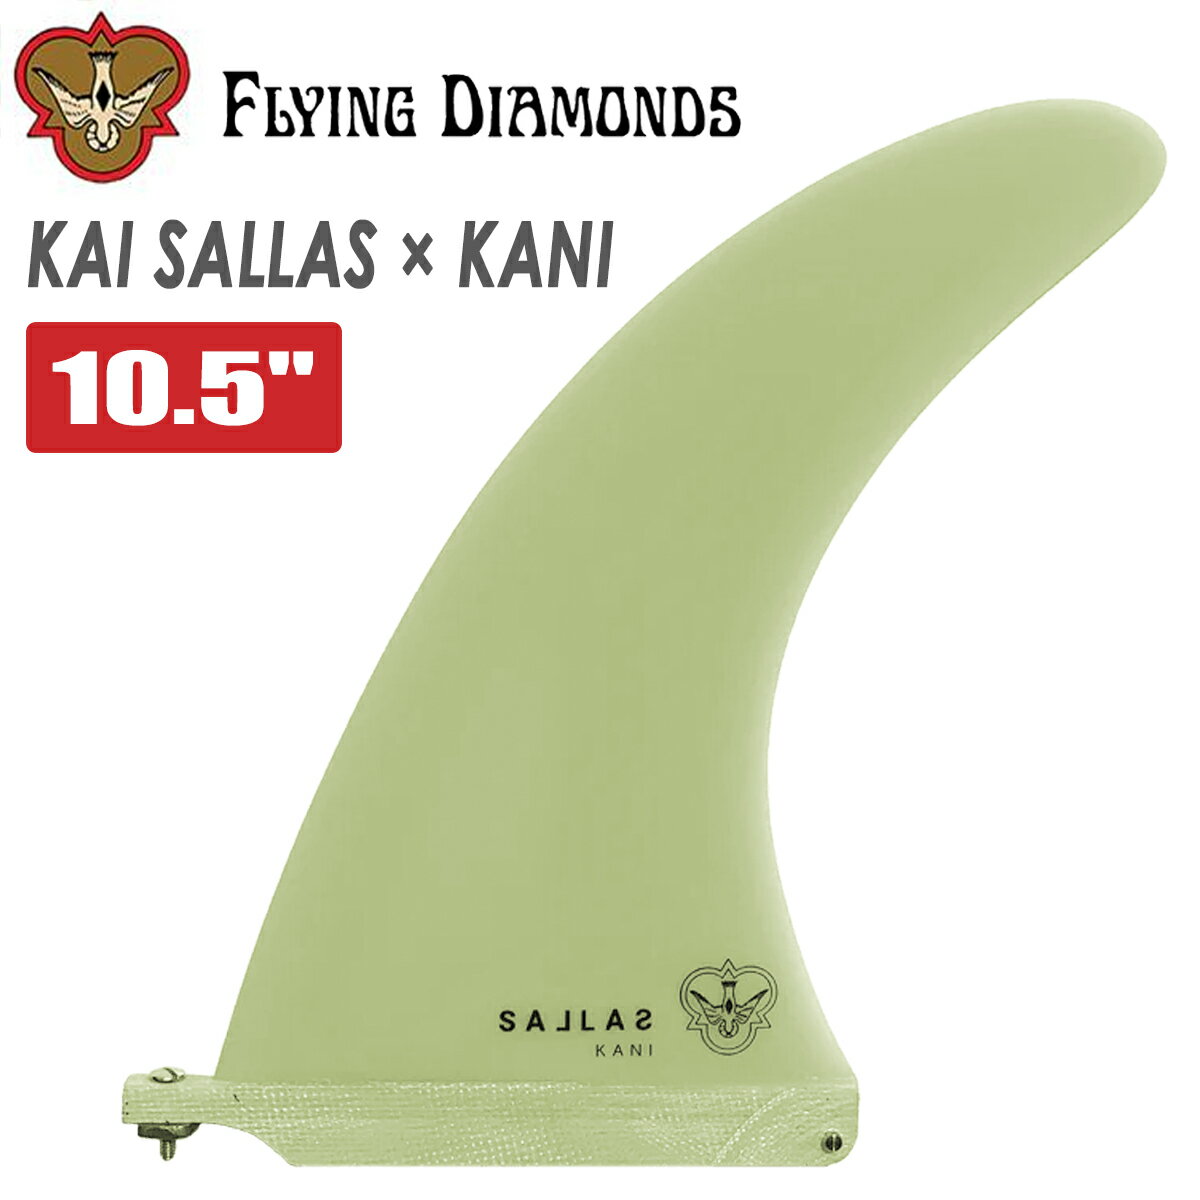 24 FLYING DIAMONDS フライングダイヤモンド フィン KAI SALLAS X KANI 10.5” カイ・サラス カニエラ・スチュワート シングルフィン サーフボード サーフィン 10.5ft TONBI KANIELA STEWART 日…